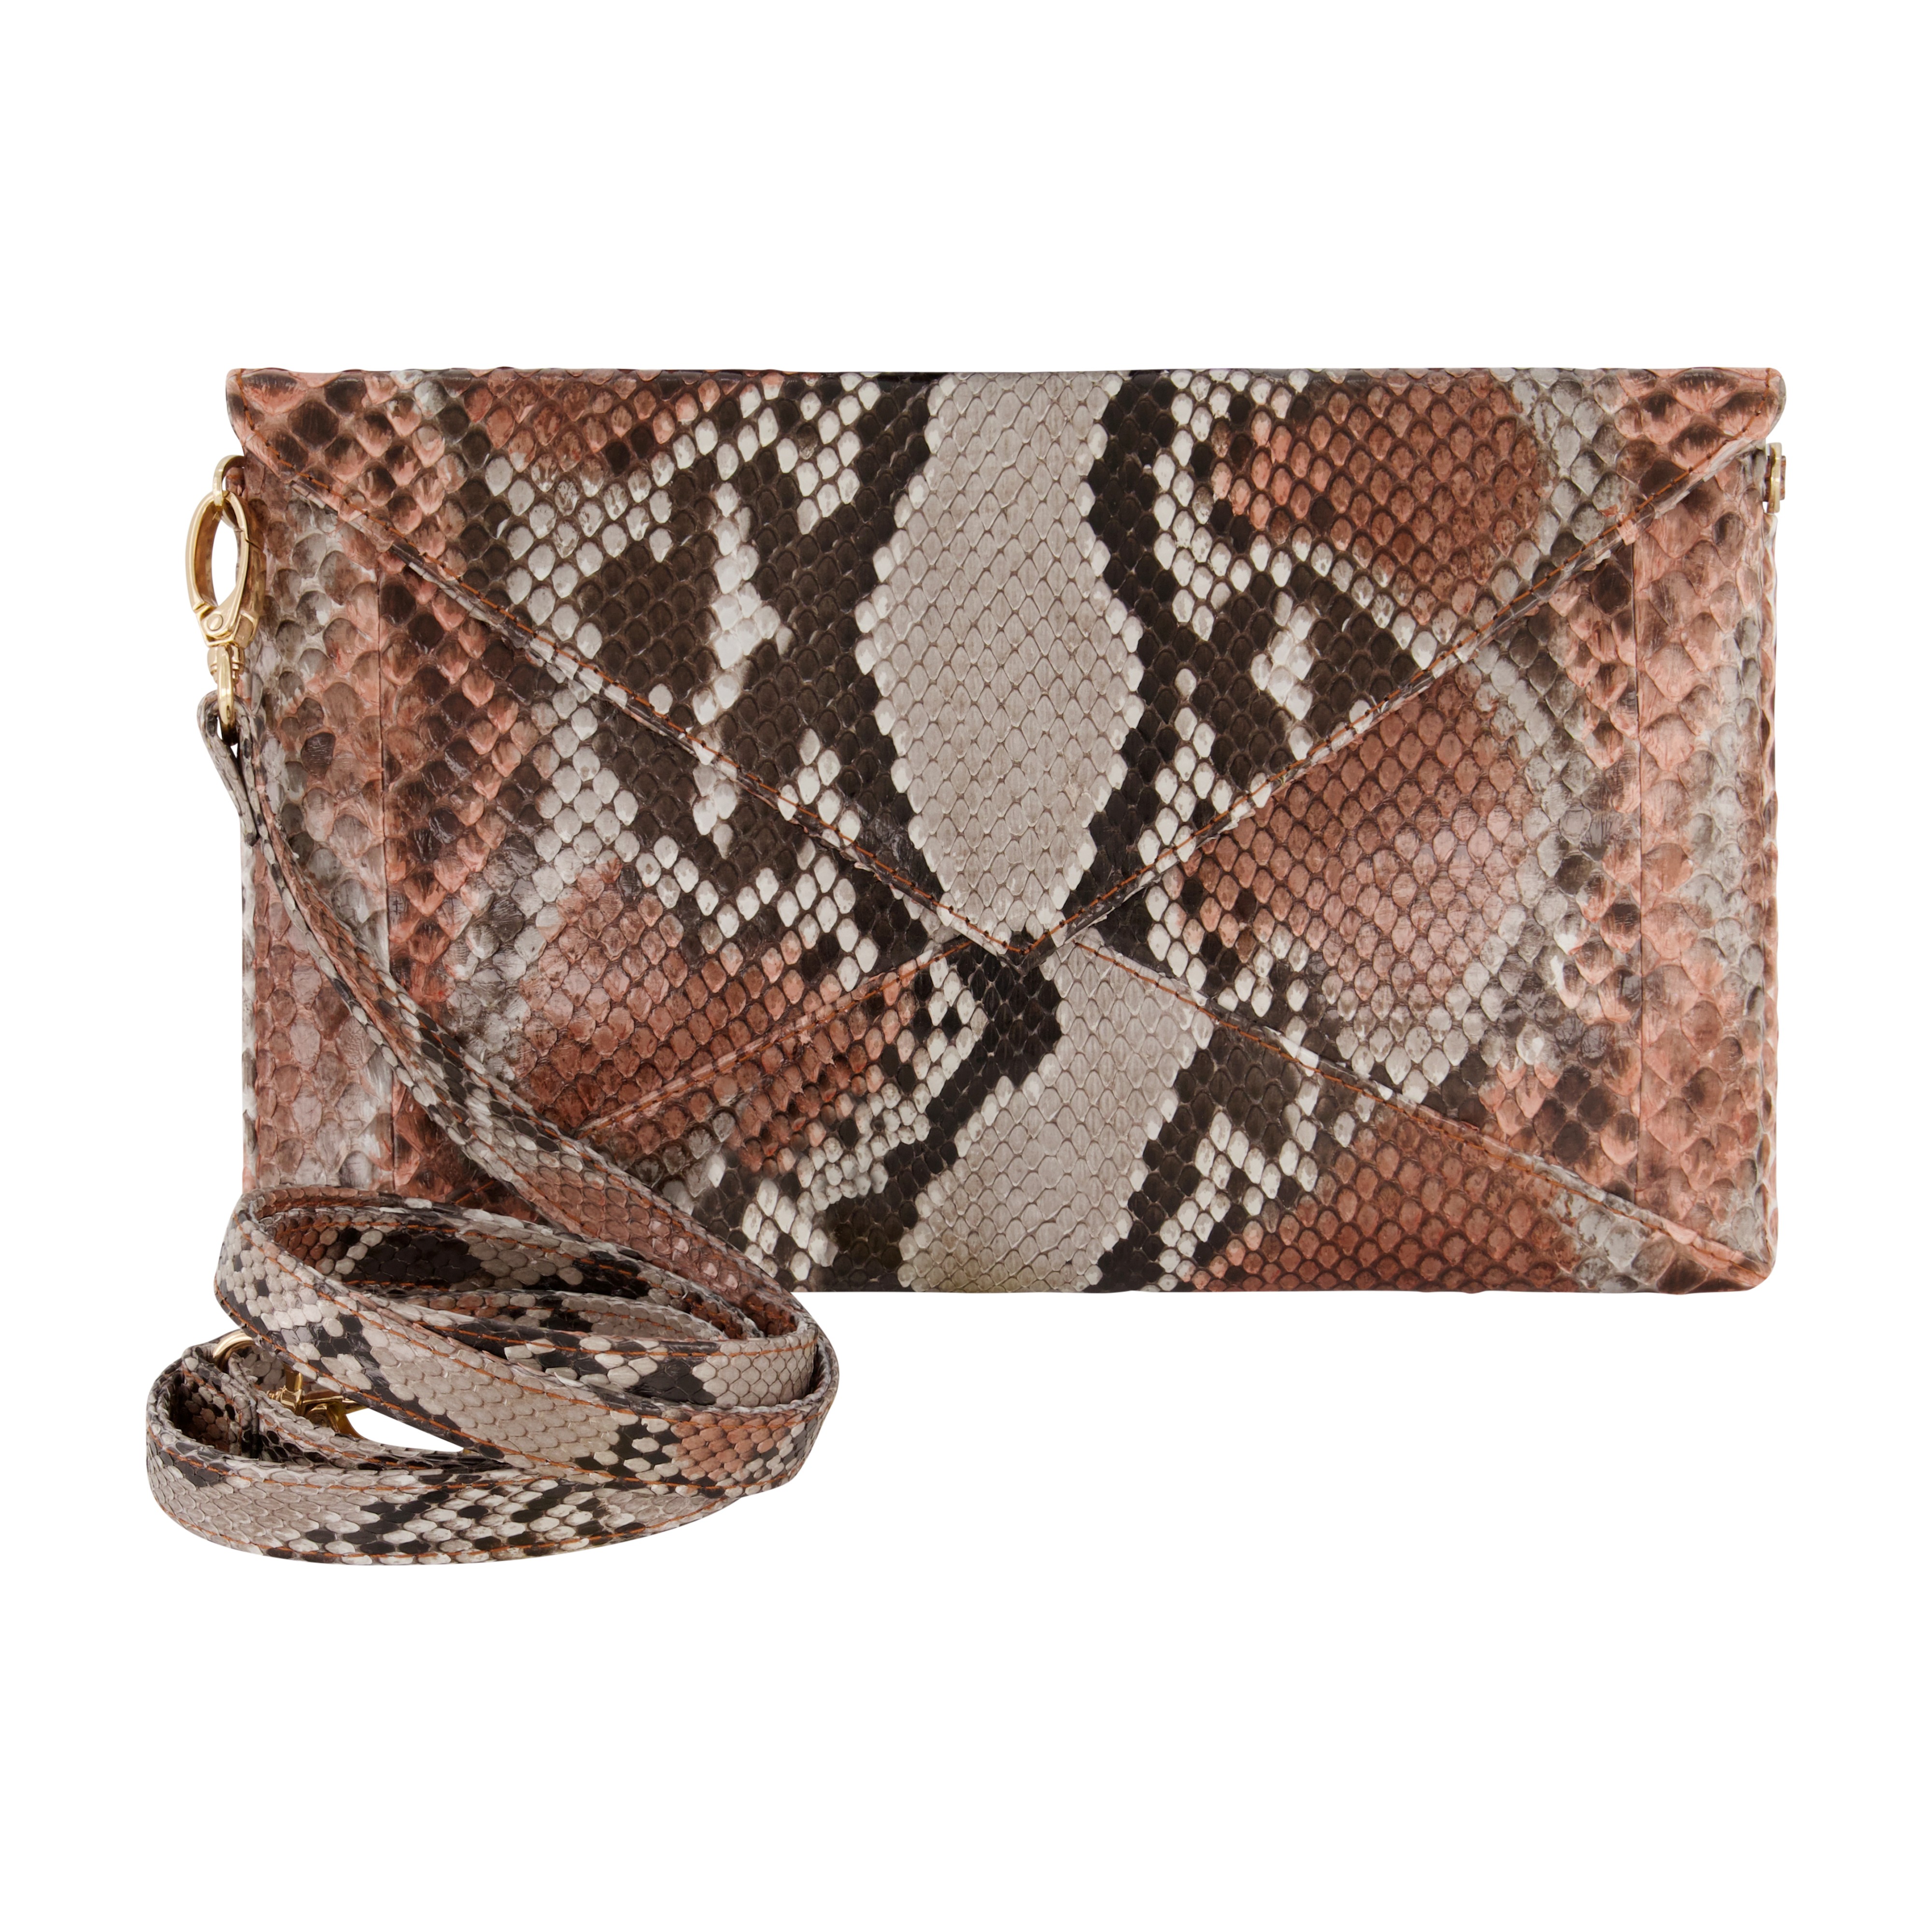 Home - Shop Snakeskin Handbags